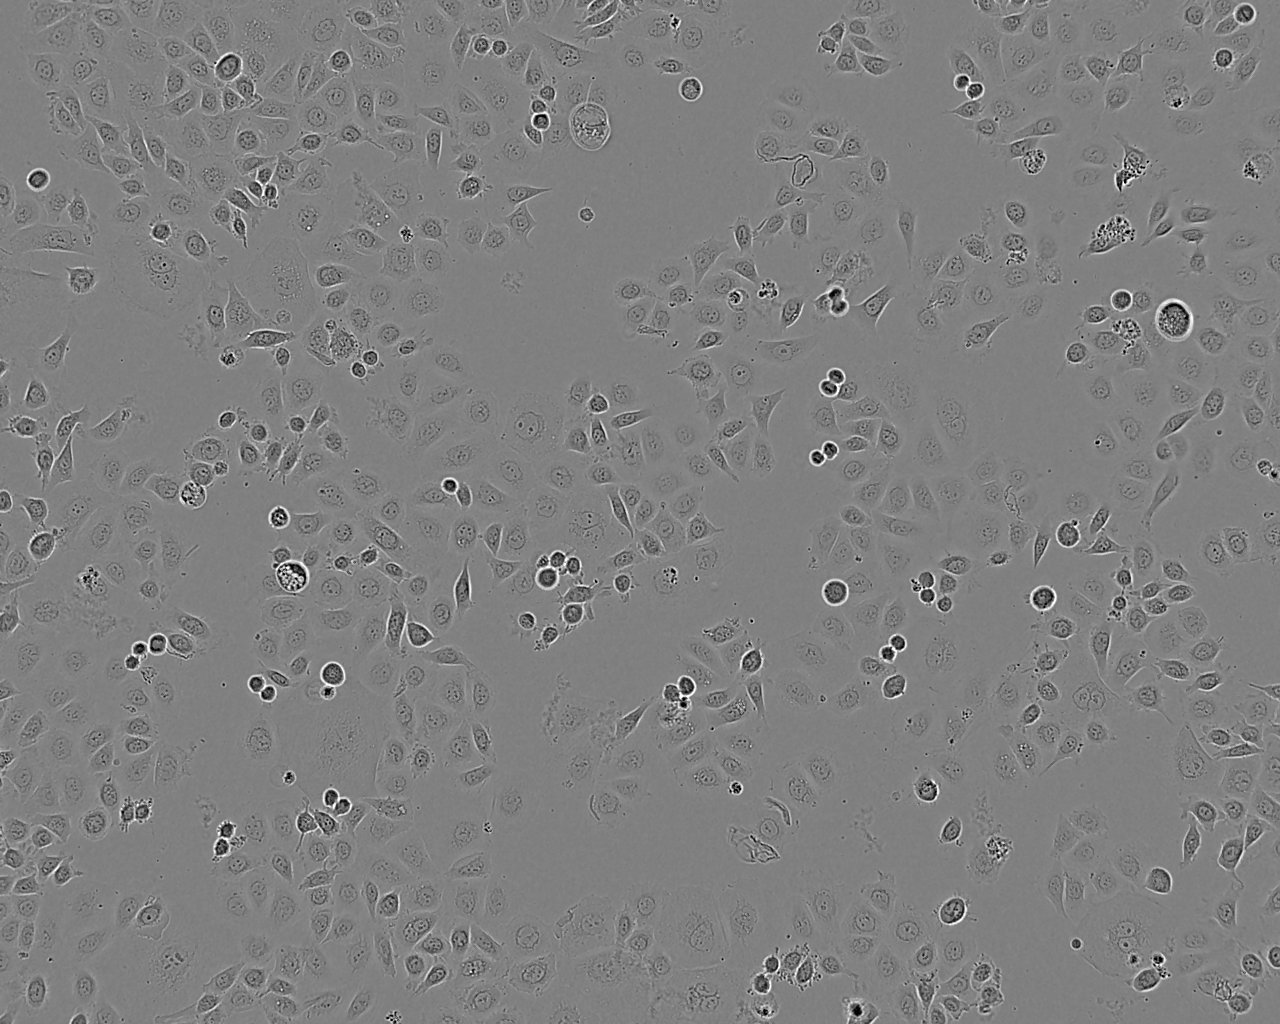 SNU-886 epithelioid cells人肝癌细胞系,SNU-886 epithelioid cells